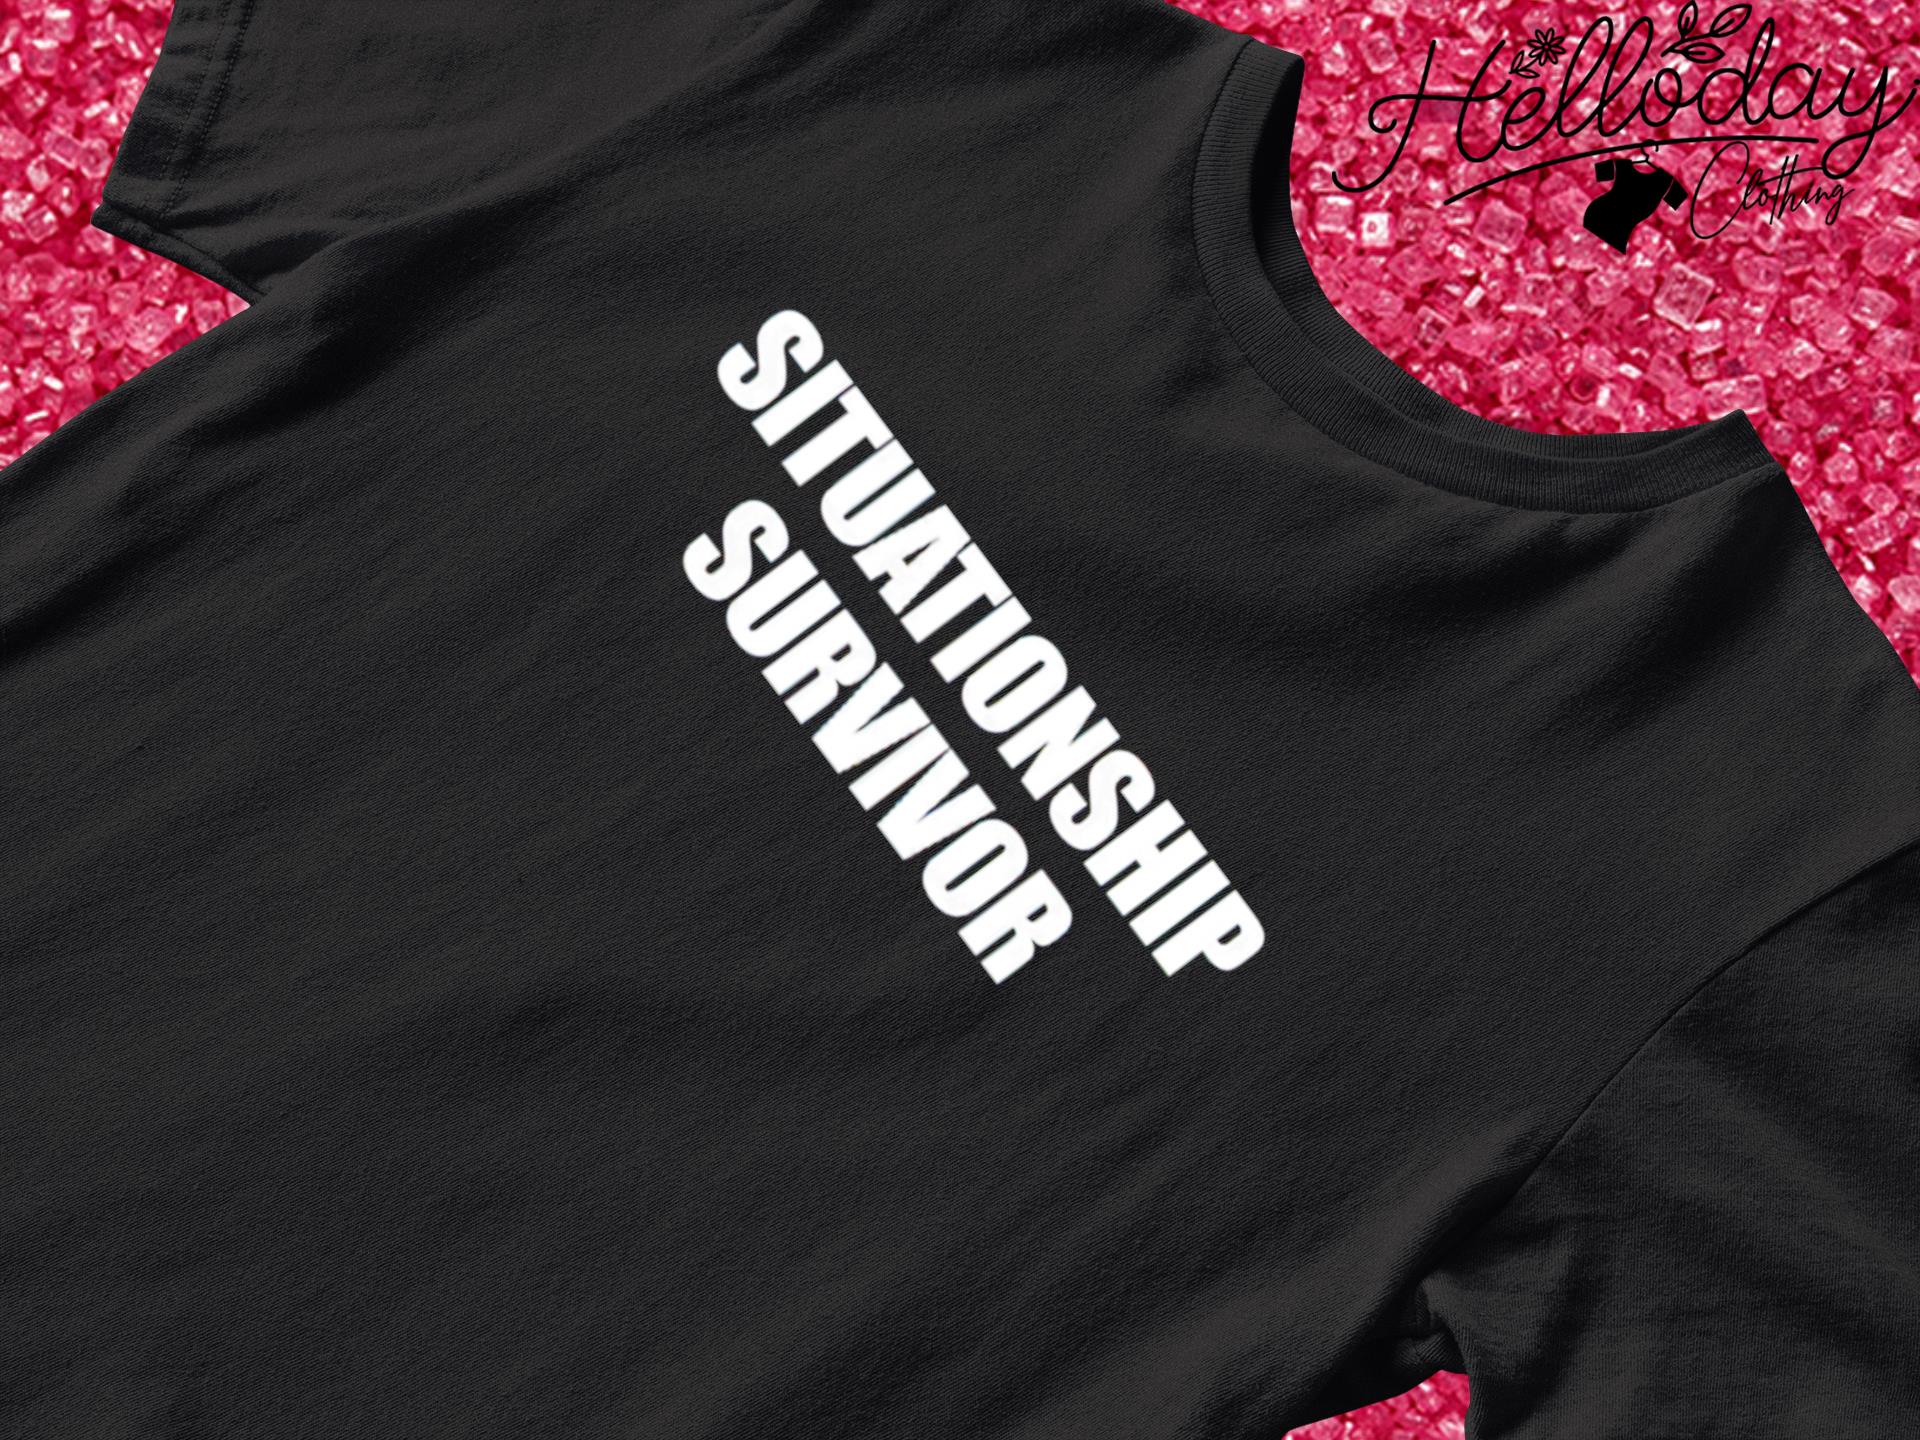 Situationship survivor shirt